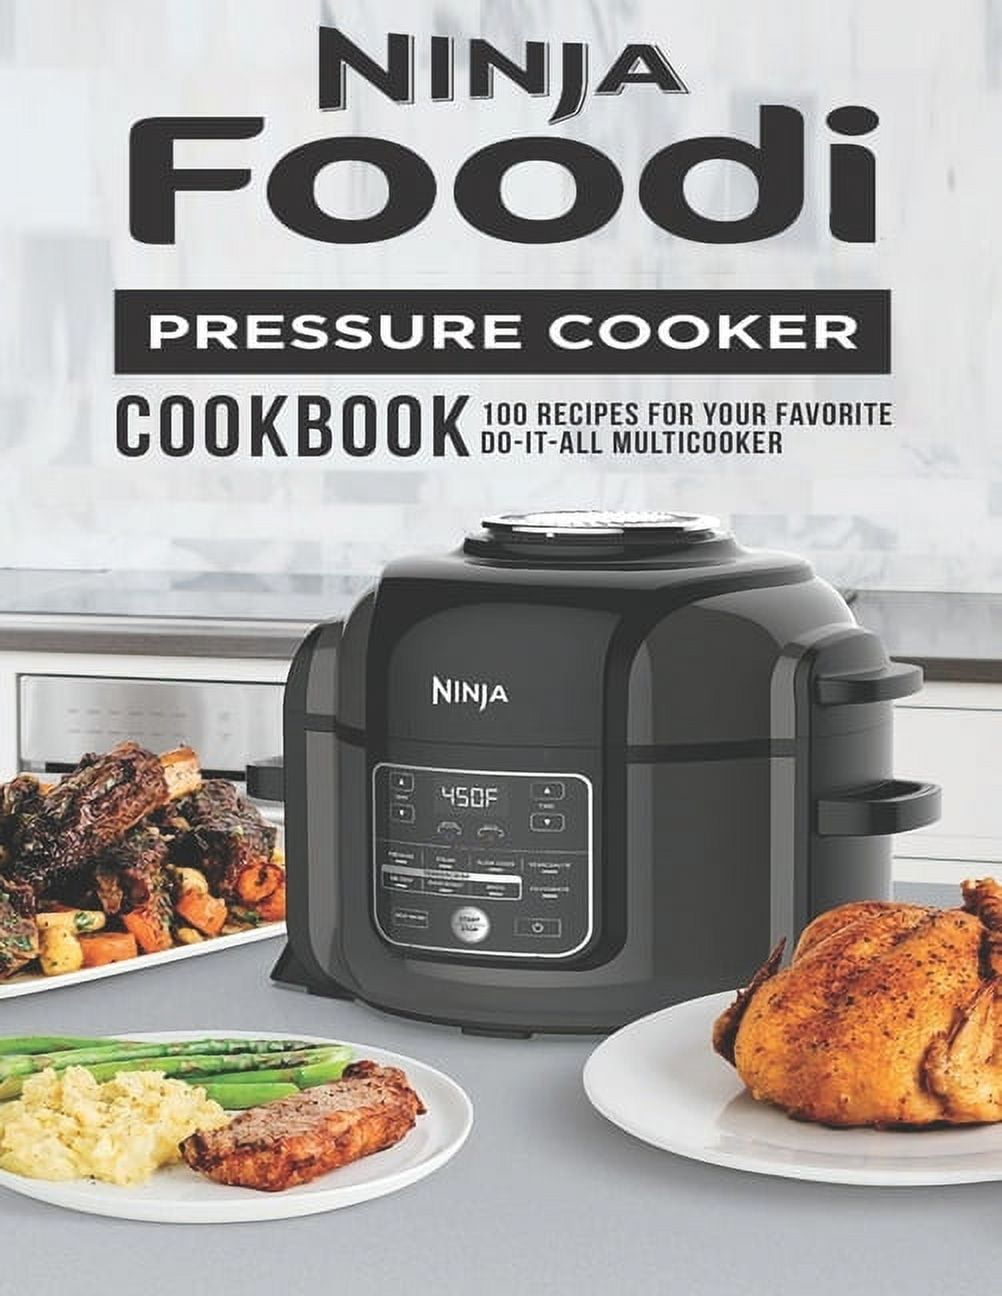 Ninja Foodi Pressure Cooker Cookbook: 100 Recipes for Your Favorite Do-It-All Multicooker [Book]